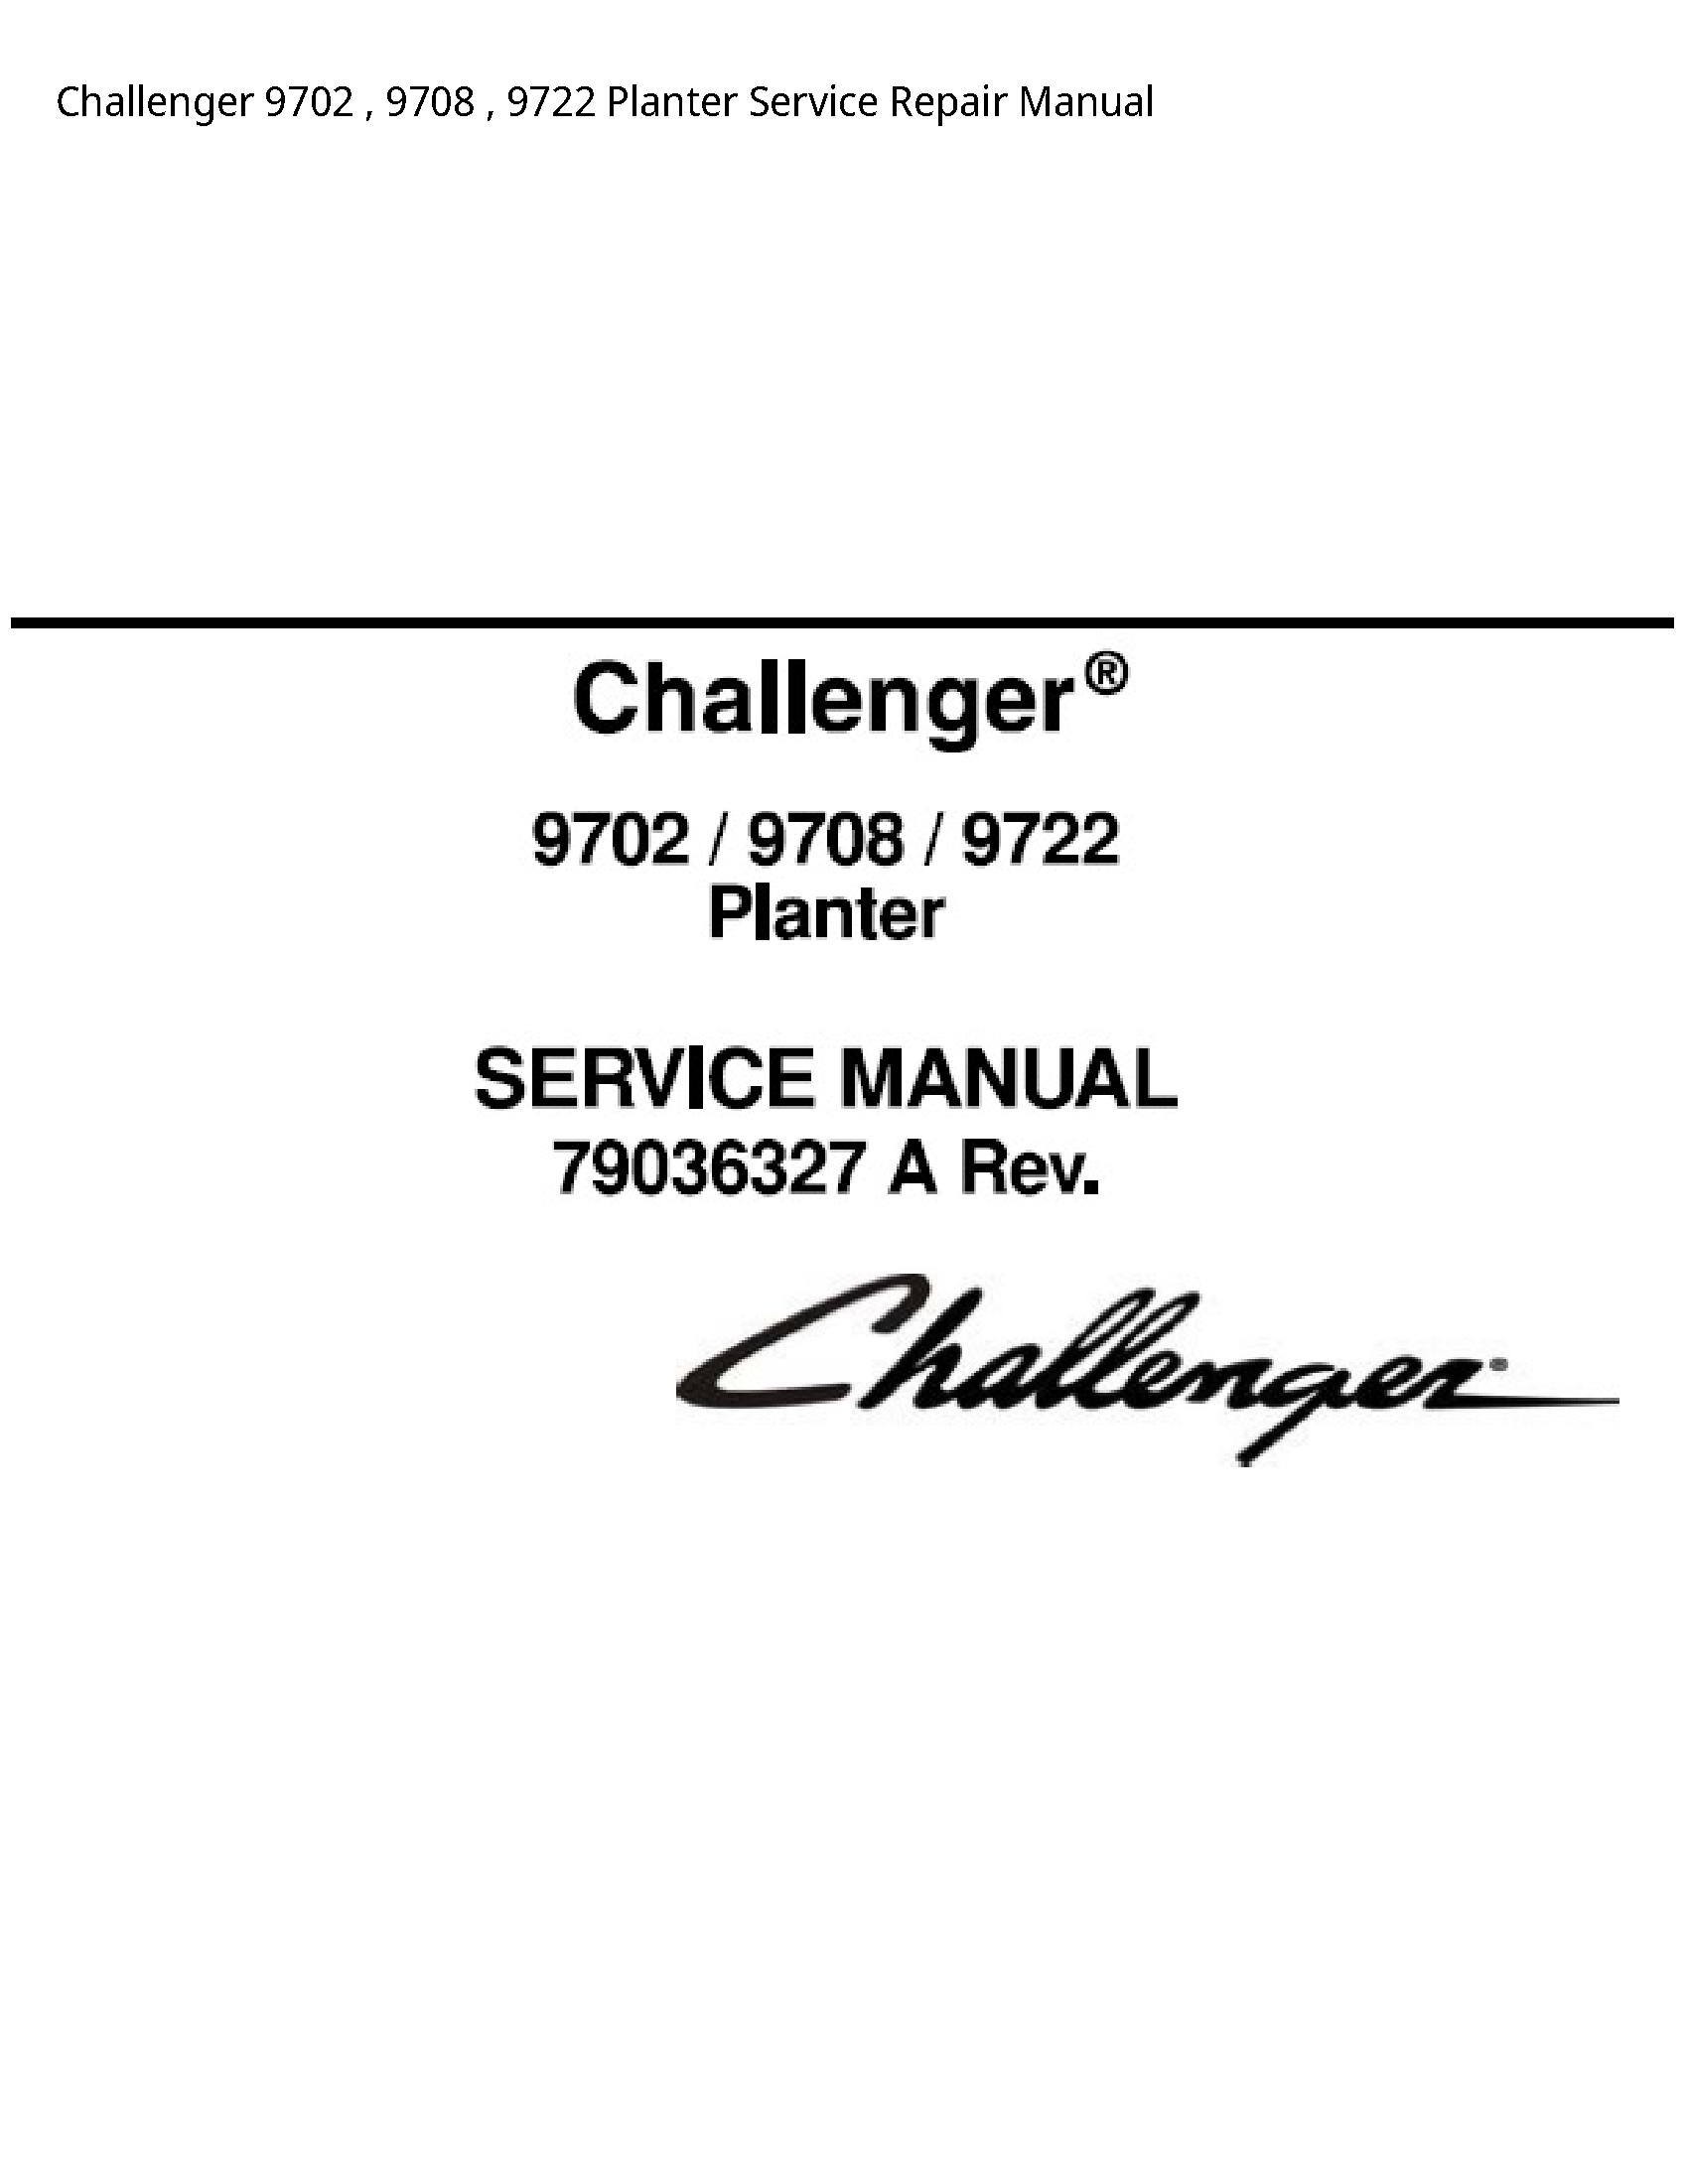 Challenger 9702 Planter manual